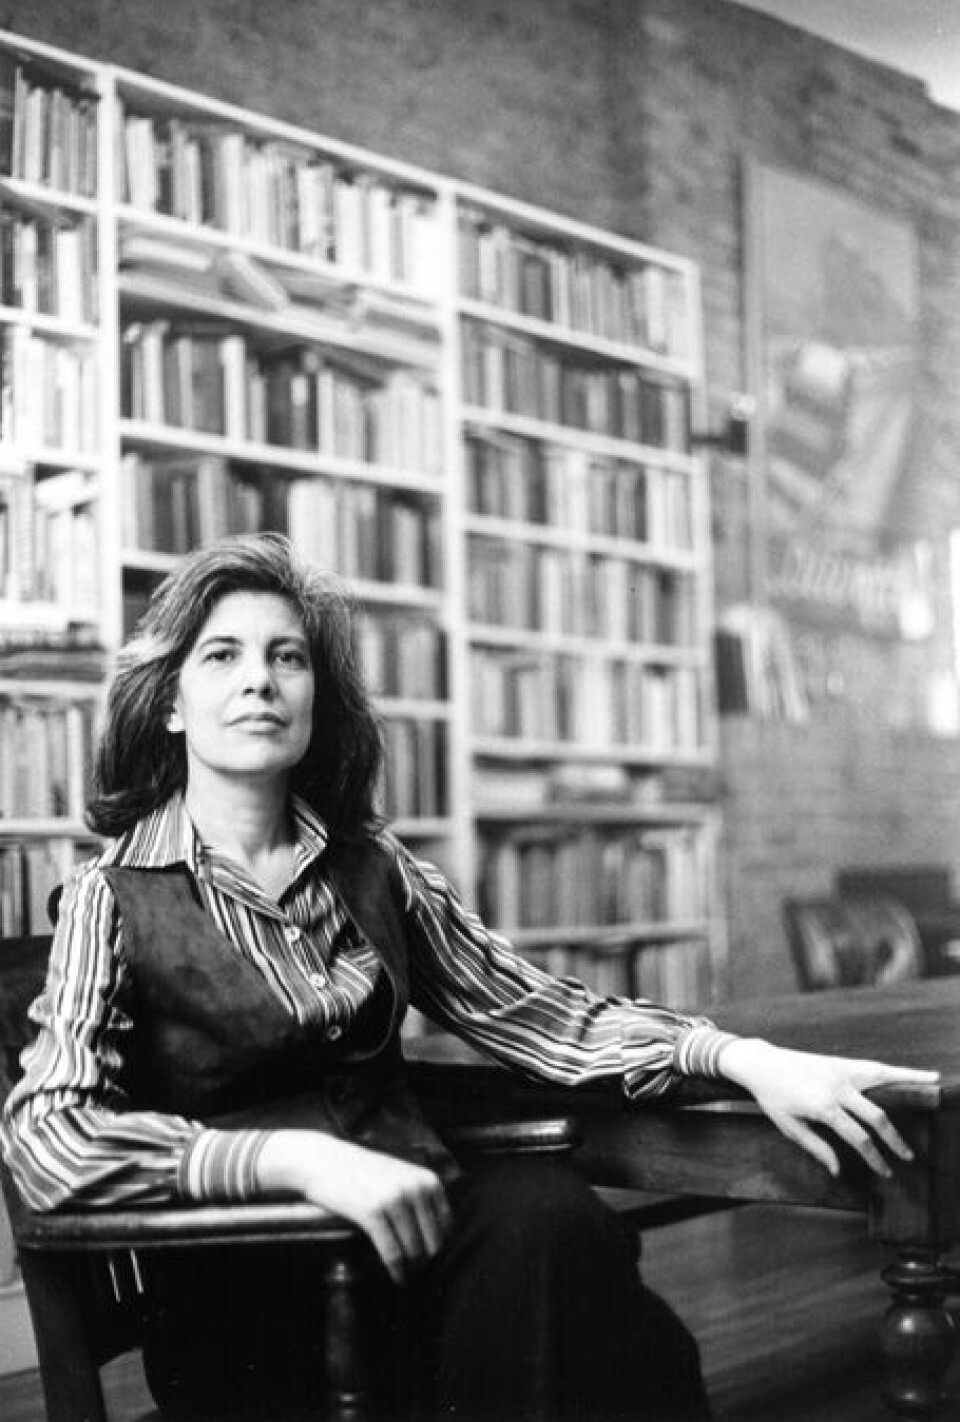 Susan Sontag (1933-2004) skrev om kunst, kultur og politikk. Forfatterskapet inkluderer bøkene «Against Interpretation» (1966), «On Photography» (1976), «Illness as Metaphor» (1979) og «AIDS and its Metaphors» (1989).